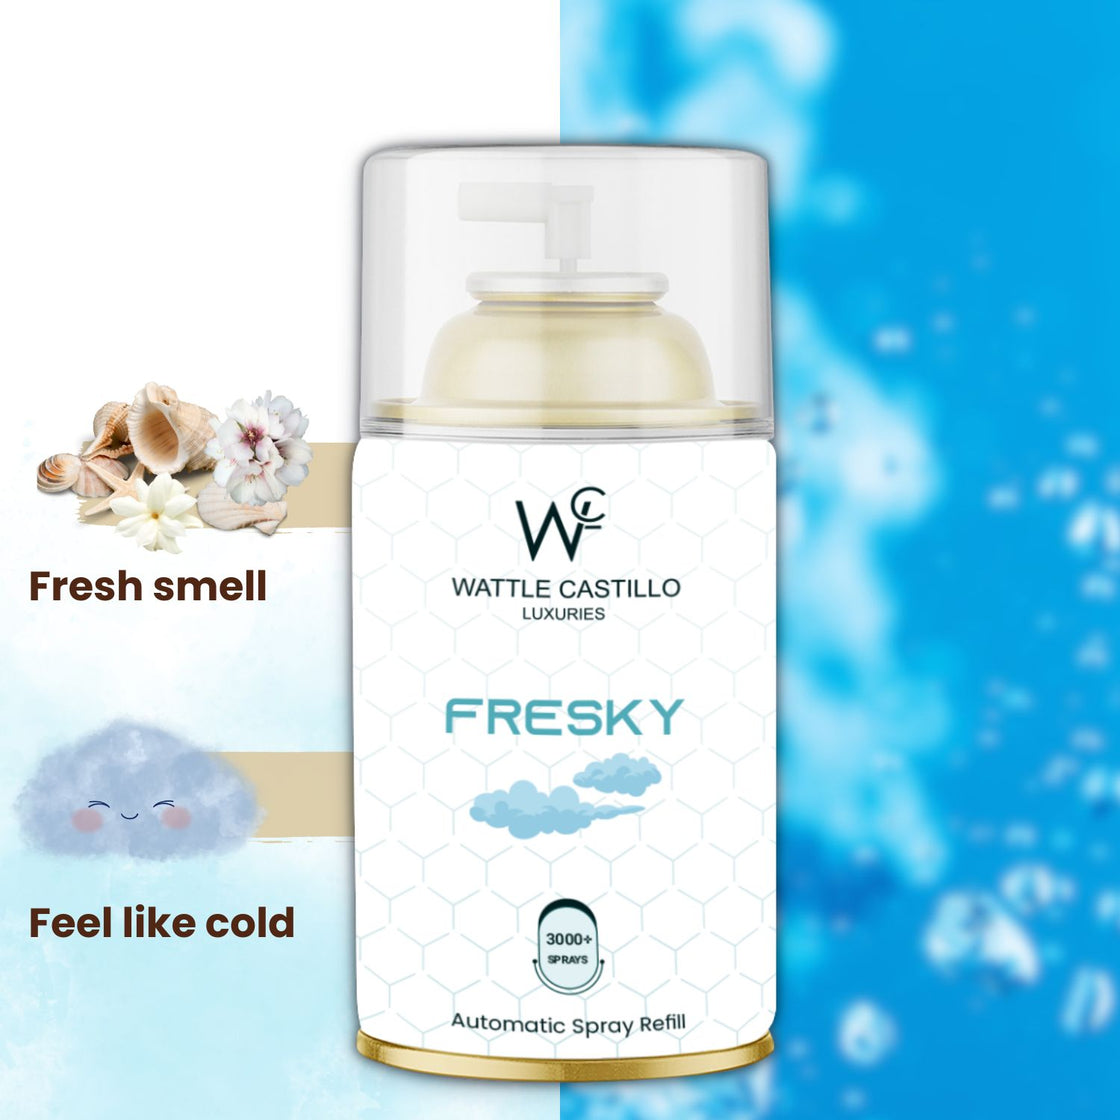 Wattle castillo Fresky Automatic Room Fresheners Refill (2ml) & 3000+ Sprays Guaranteed Lasts up to 80 days